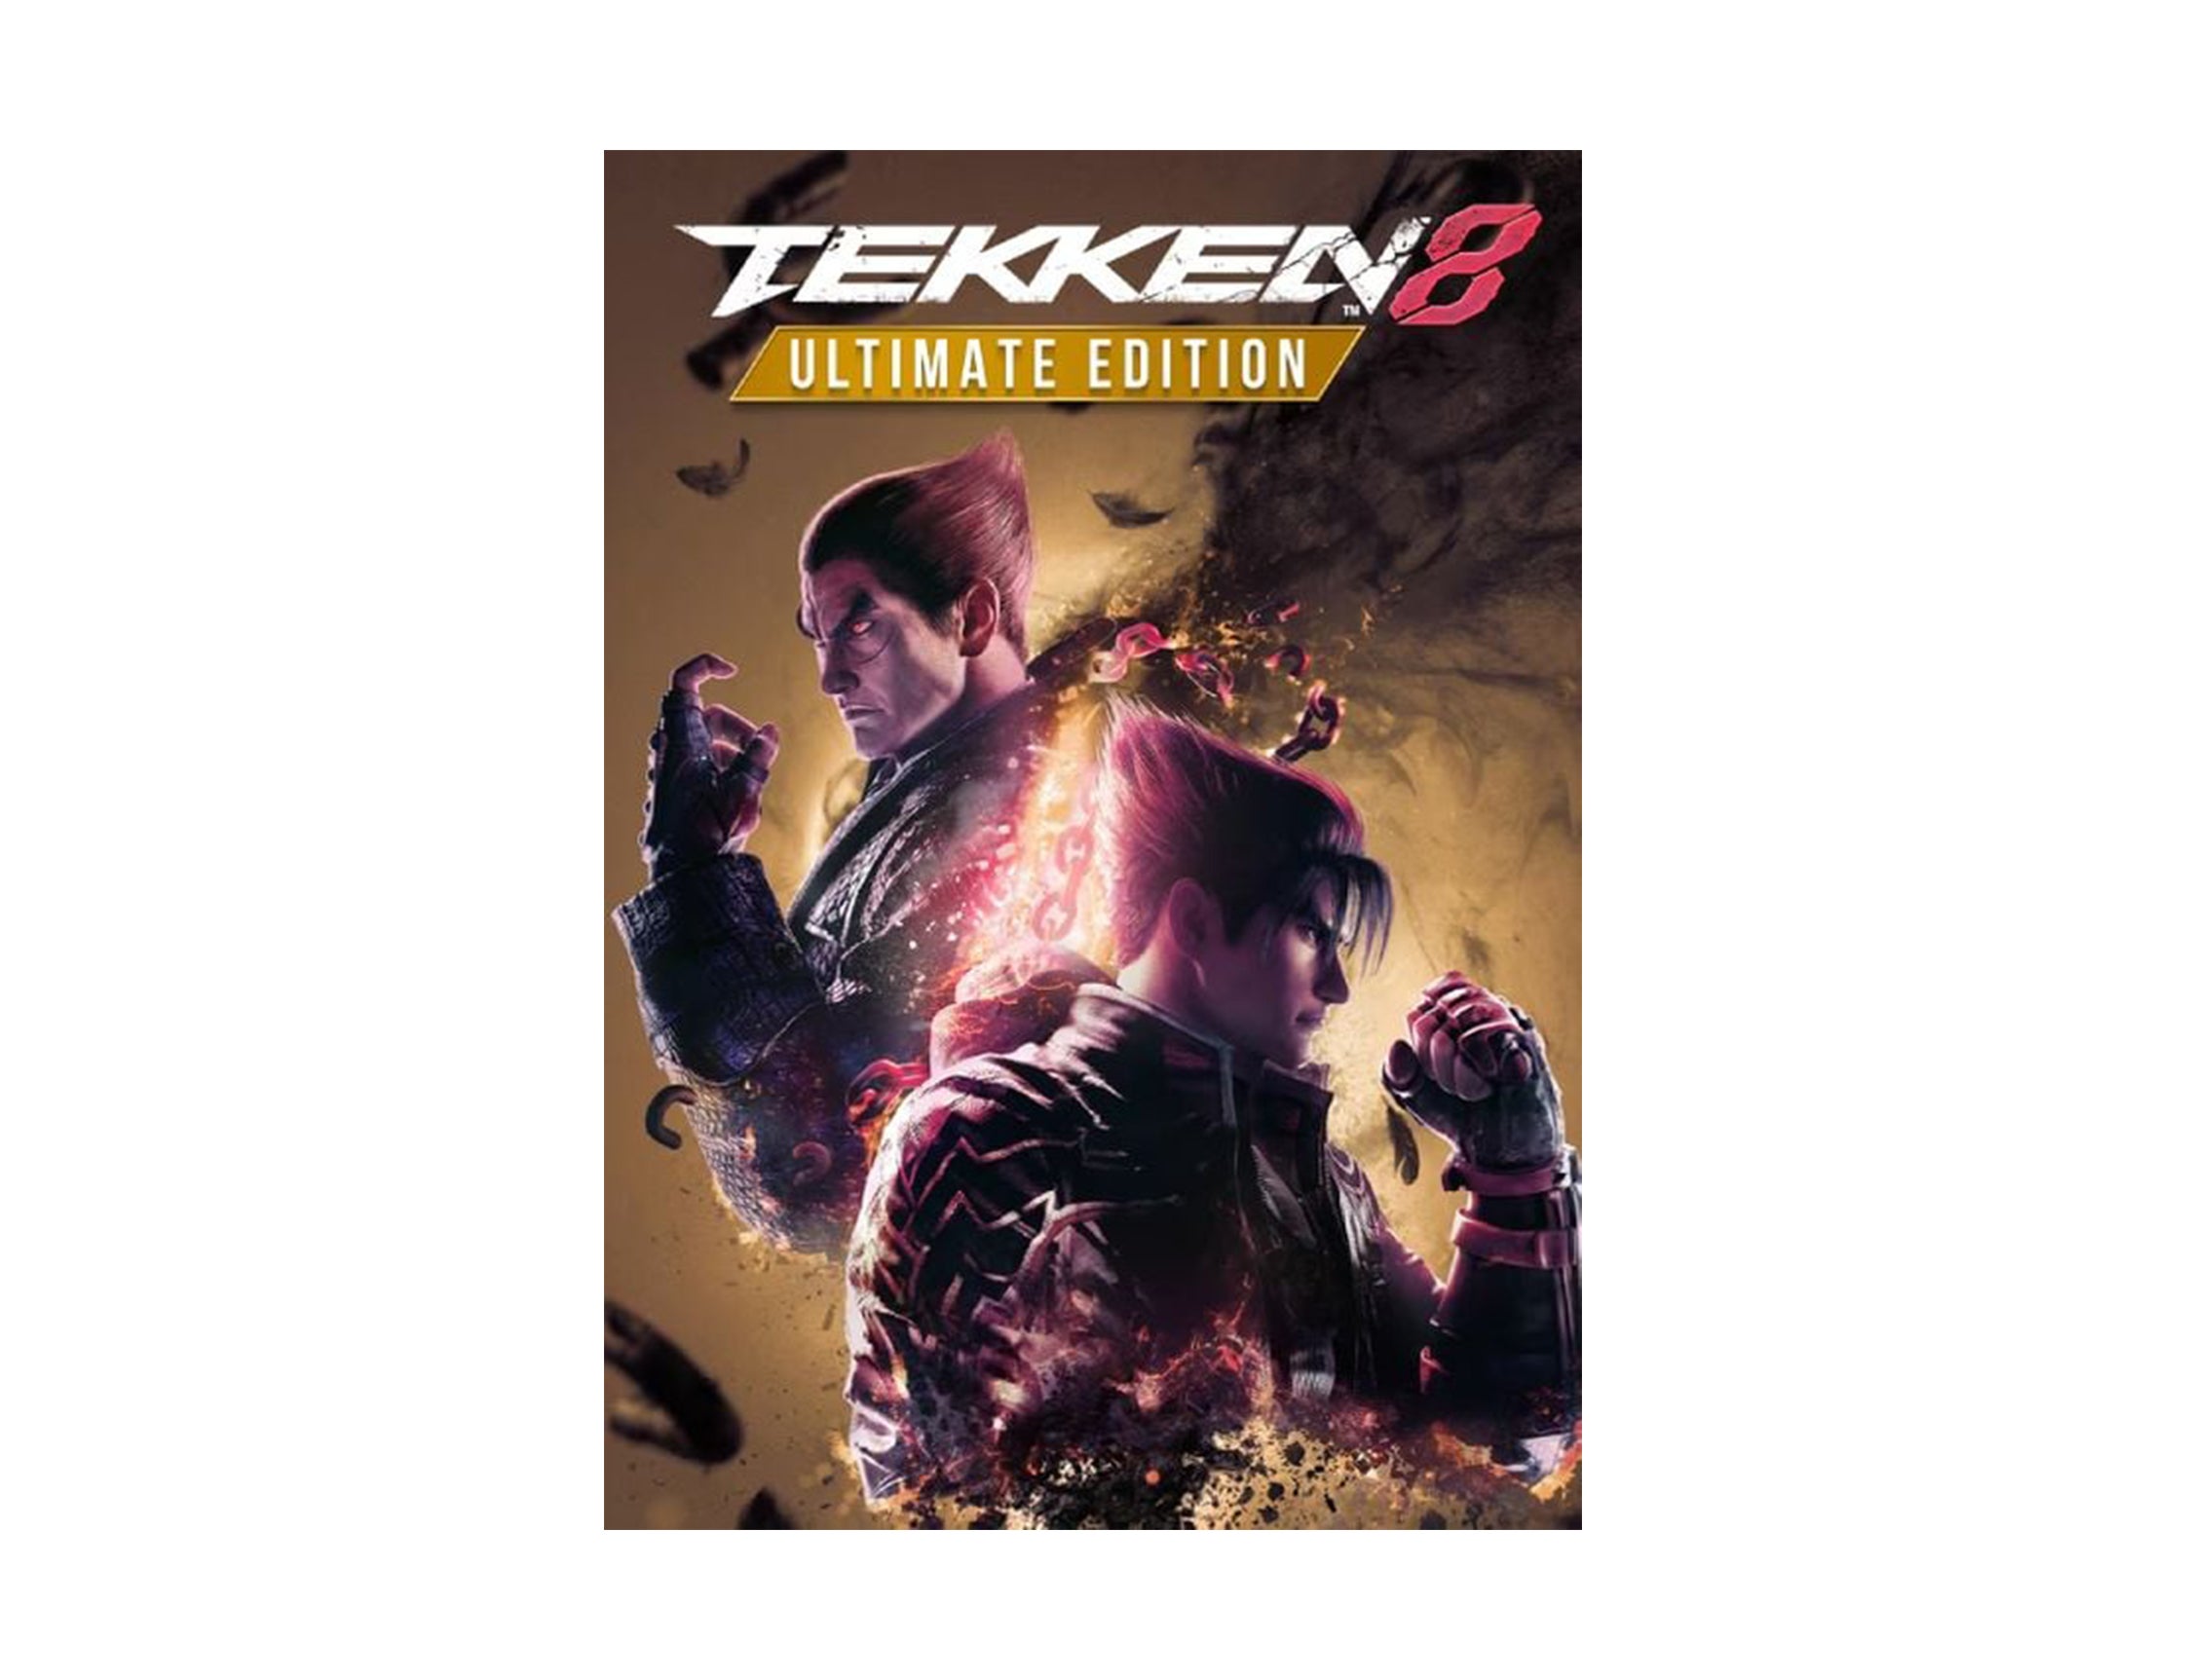 TEKKEN 8 - Deluxe Edition Steam Key for PC - Buy now